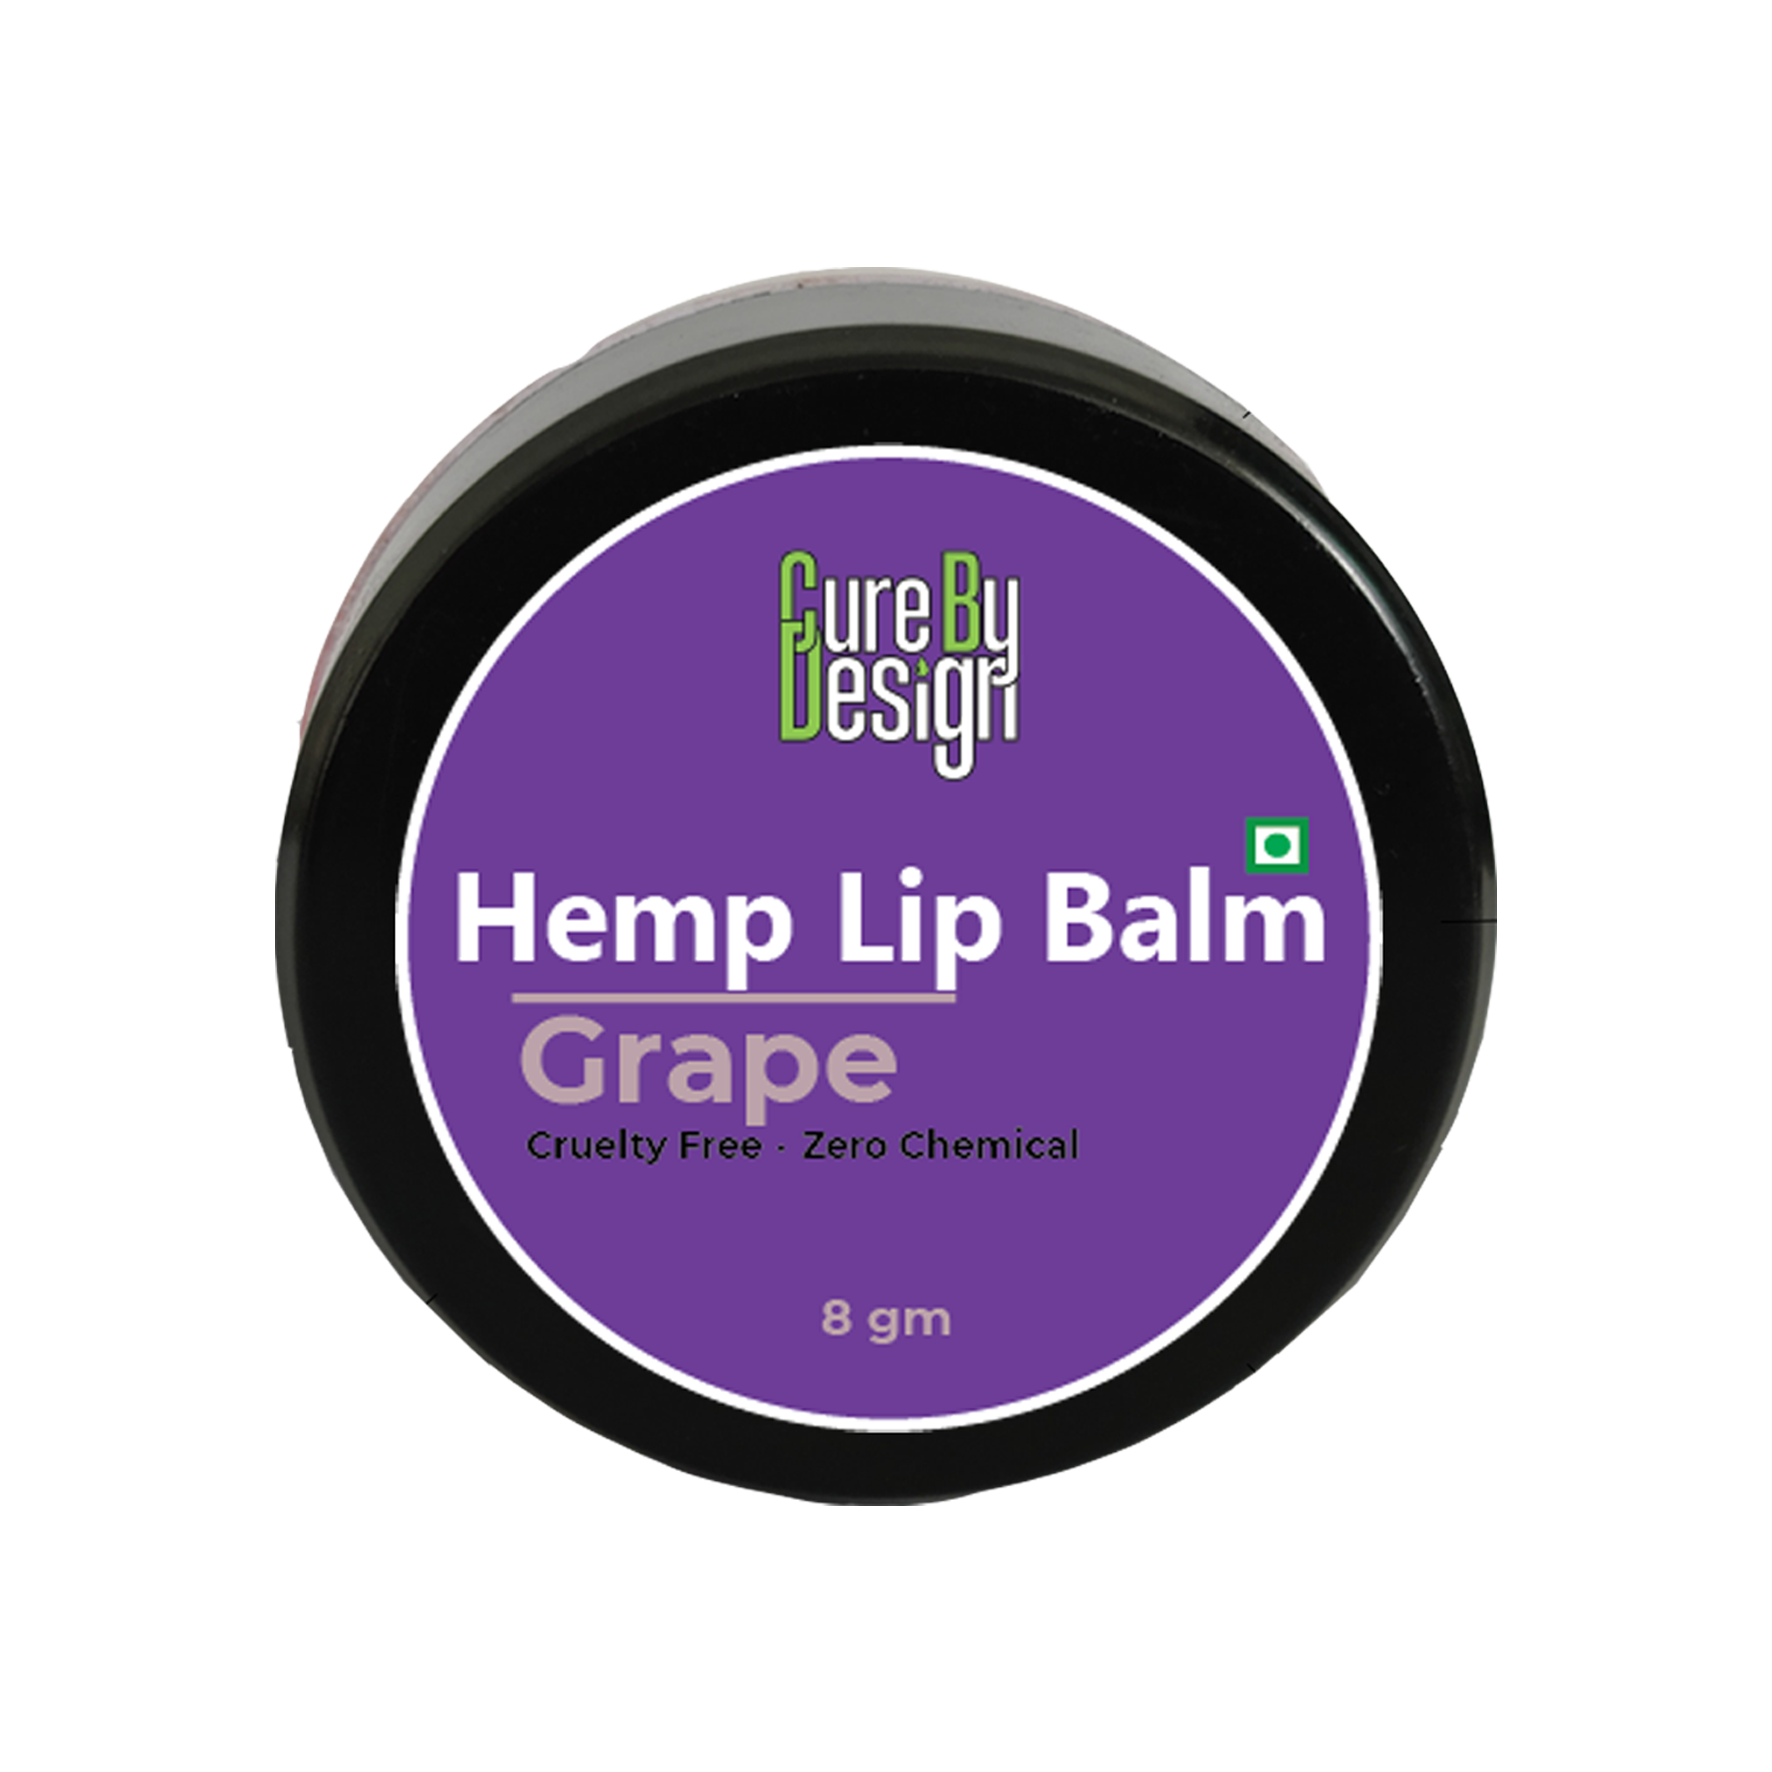 Cure By Design Hemp Lip Balm Grape 8gm